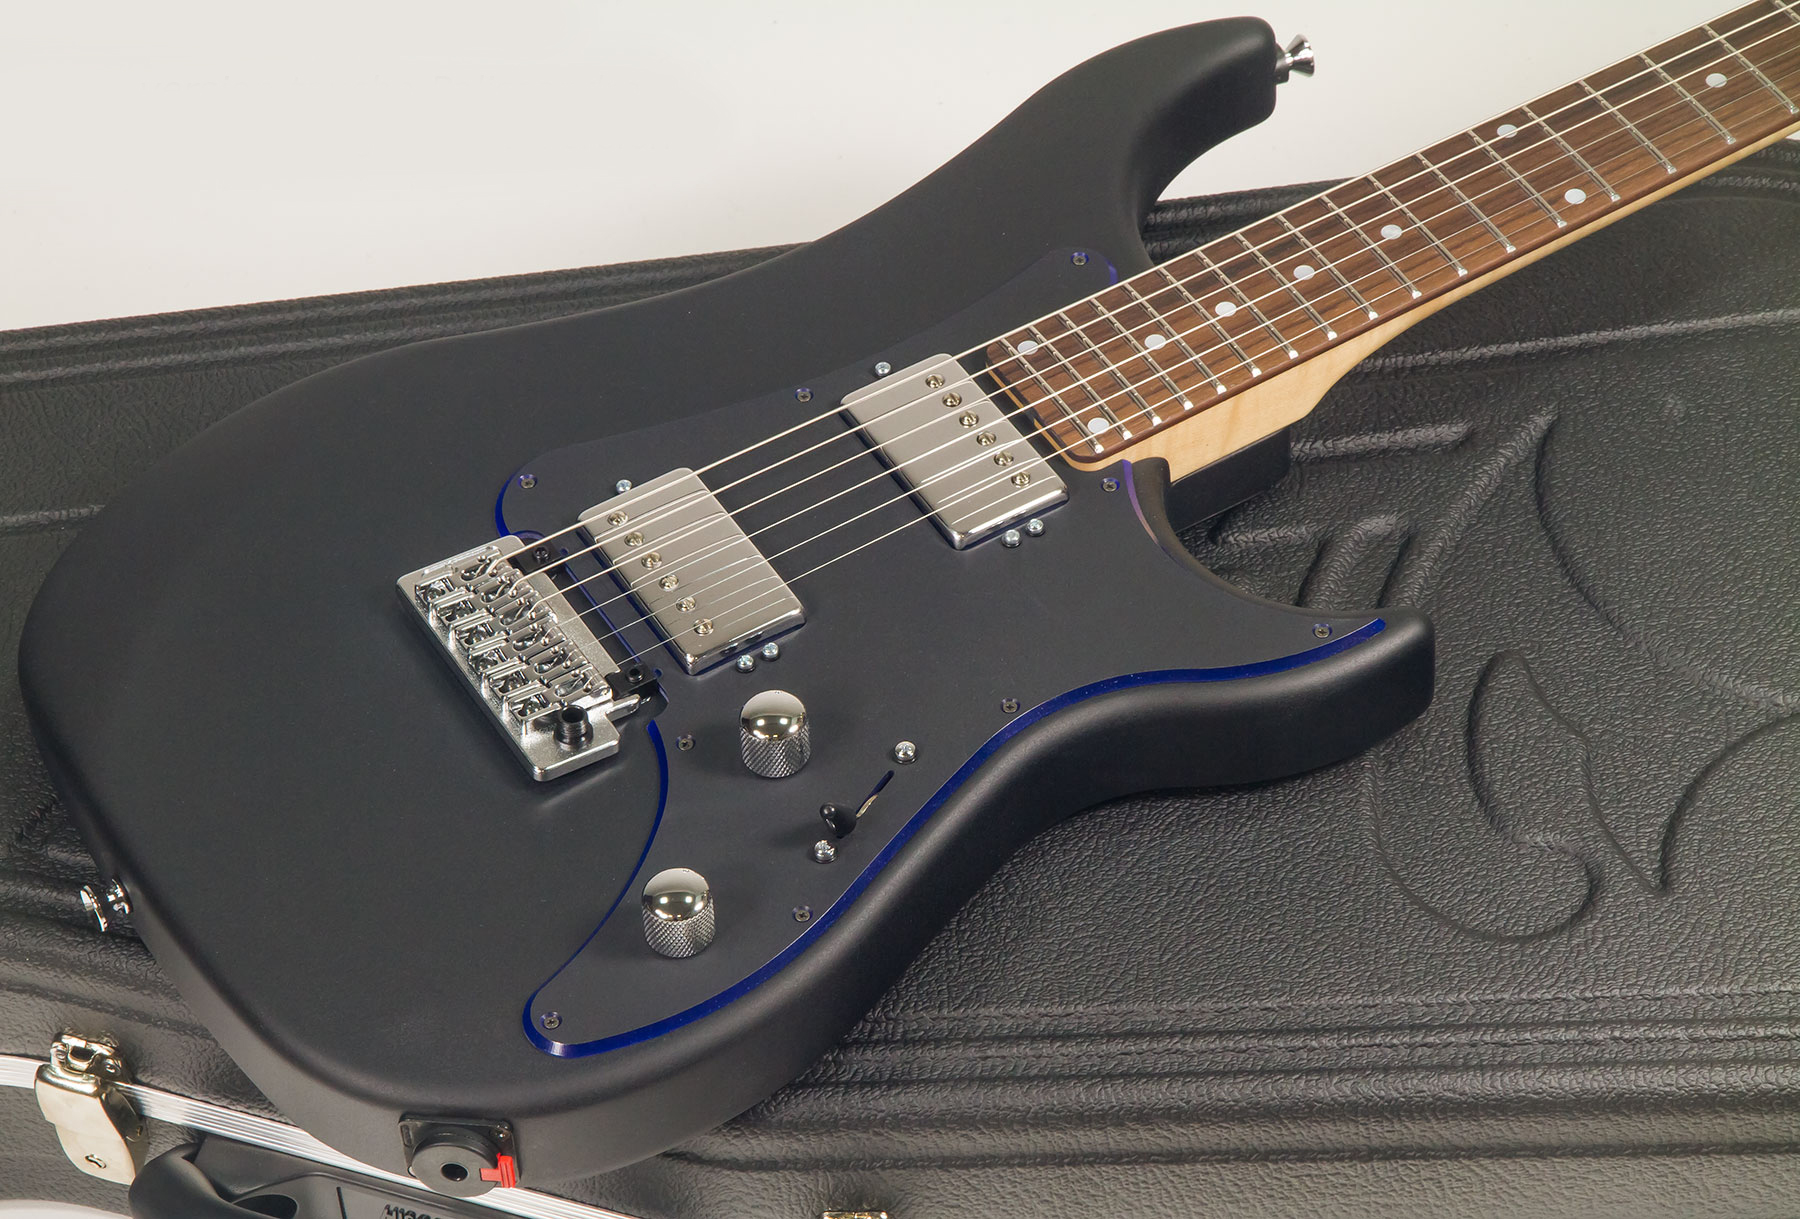 Vigier Excalibur Indus 2h Trem Rw - Textured Black - Str shape electric guitar - Variation 1